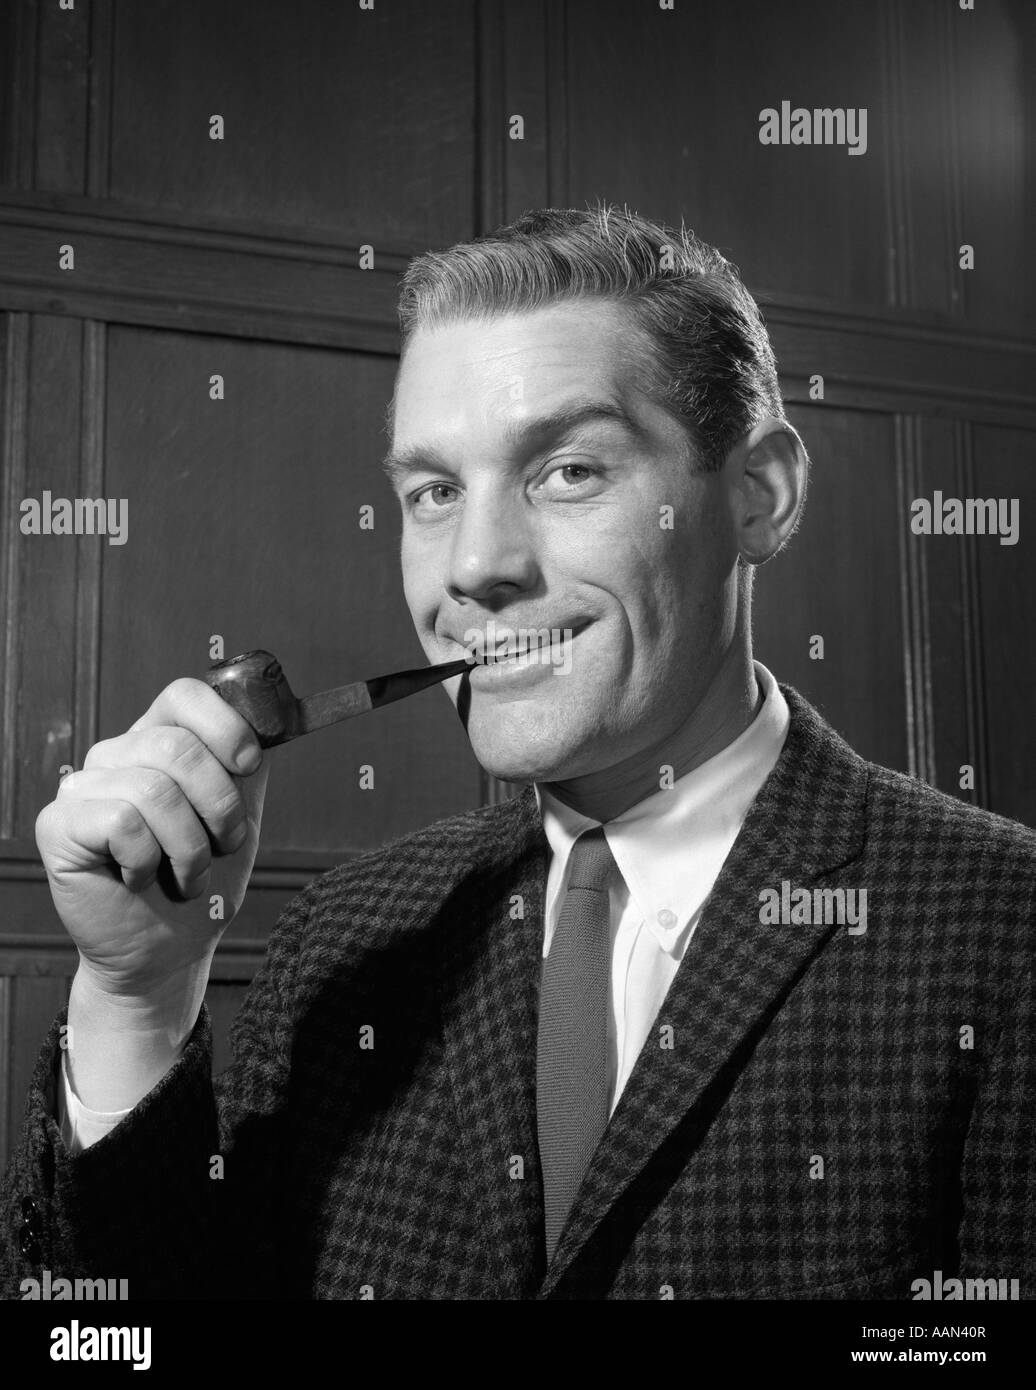 Années 1960 Années 1950 PORTRAIT D'HOMME EN TWEED JACKET PIPE SMILING AT CAMERA Banque D'Images